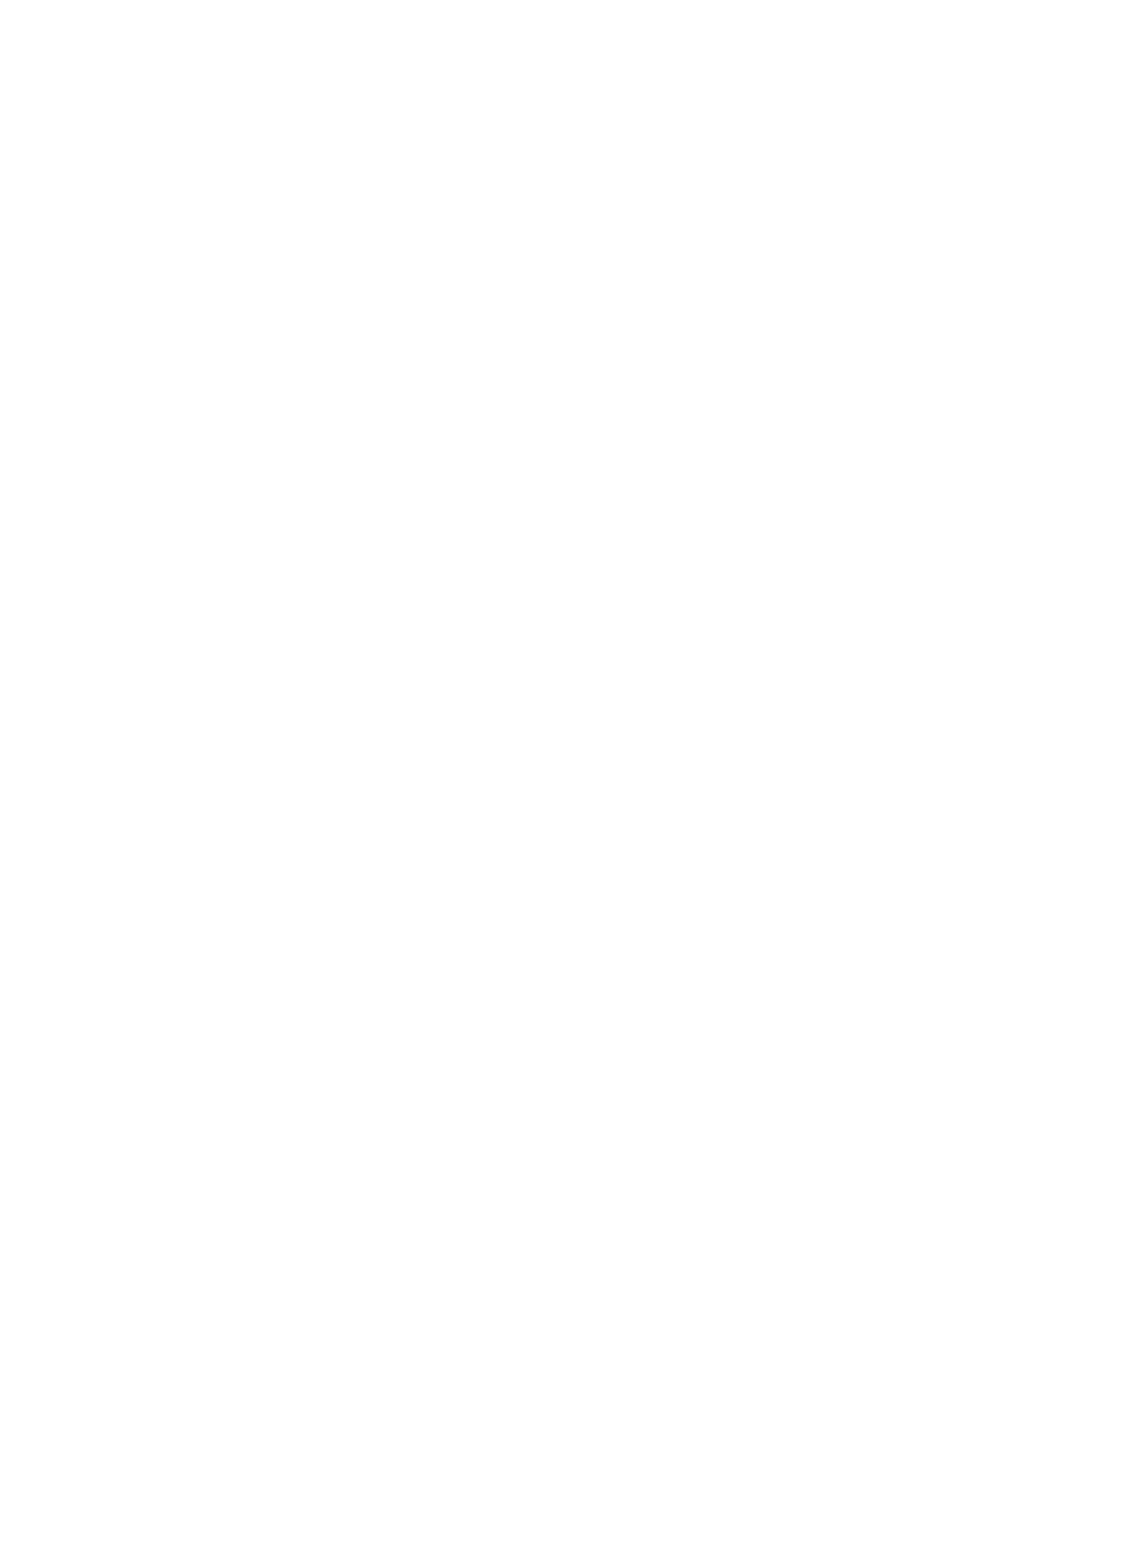 Surf Air Mobility logo for dark backgrounds (transparent PNG)